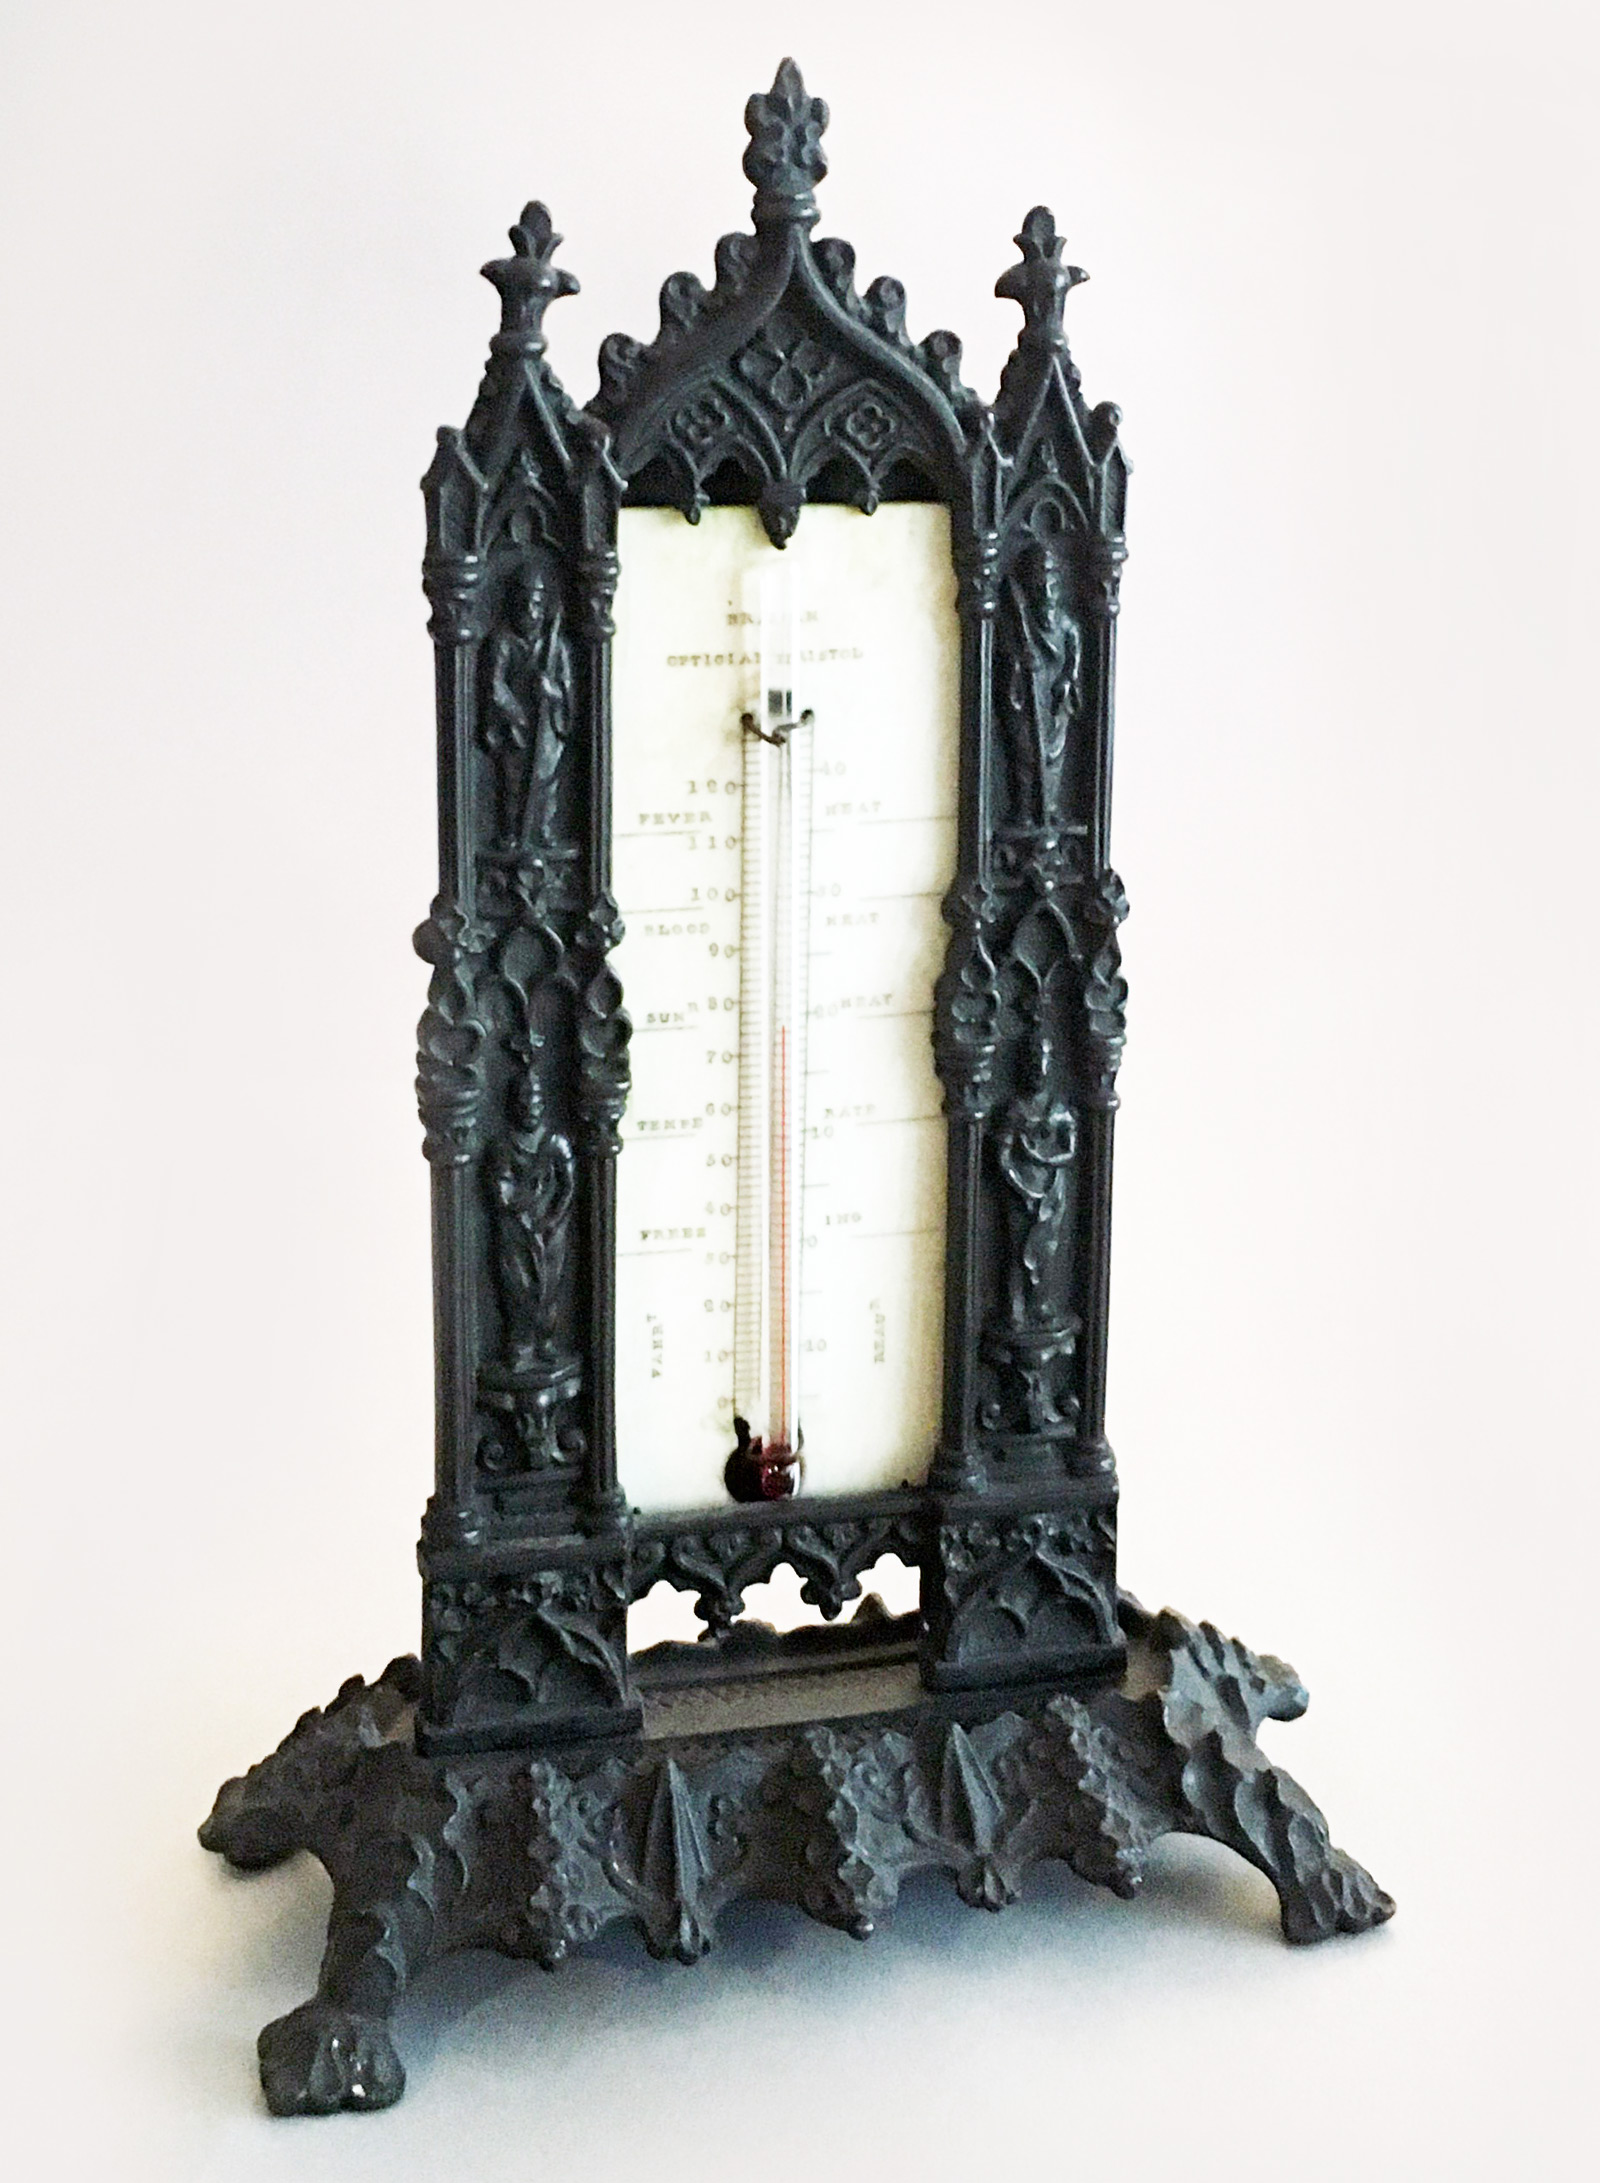 https://susansilverantiques.com/wp-content/uploads/bronze-desk-thermometer-circa-1828-susan-silver-antiques-angled-view-3823-1.jpg